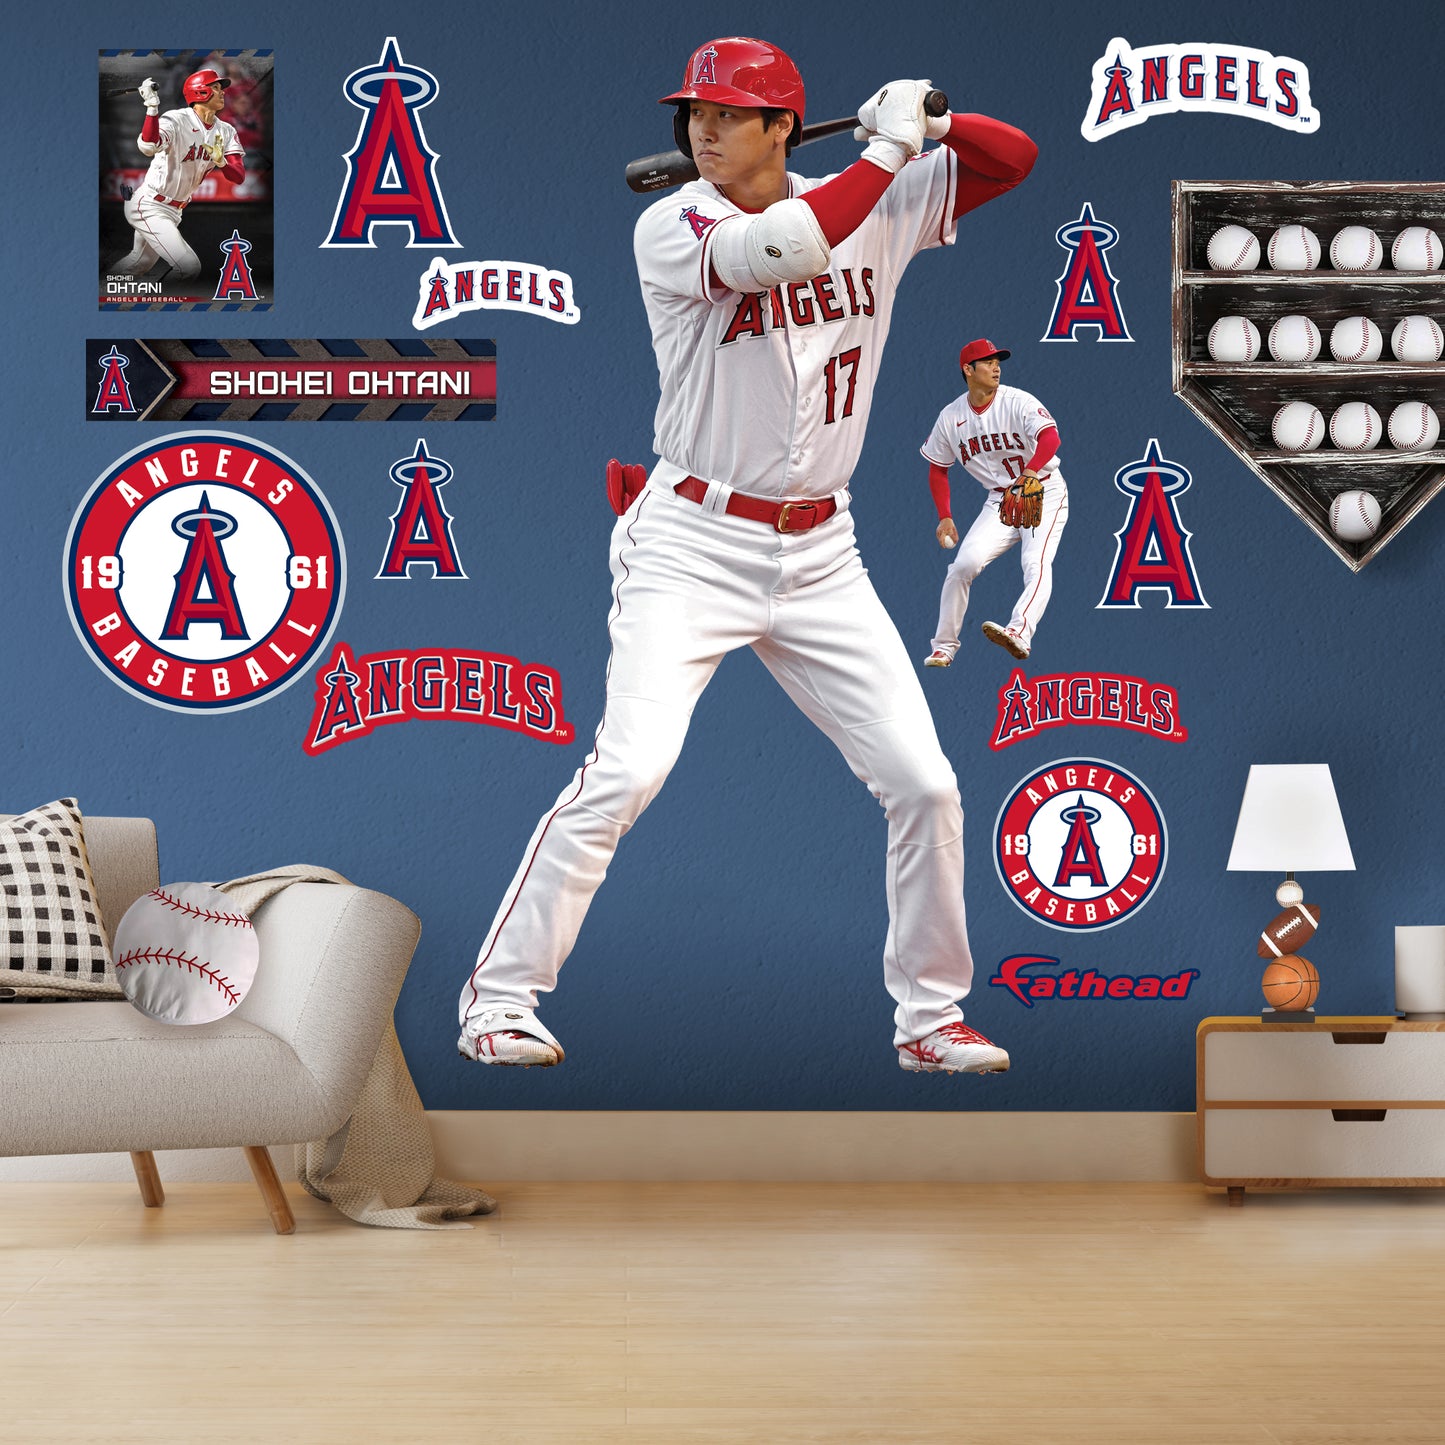 Shohei Ohtani Wallpaper  Mlb wallpaper, Baseball wallpaper, Angels baseball